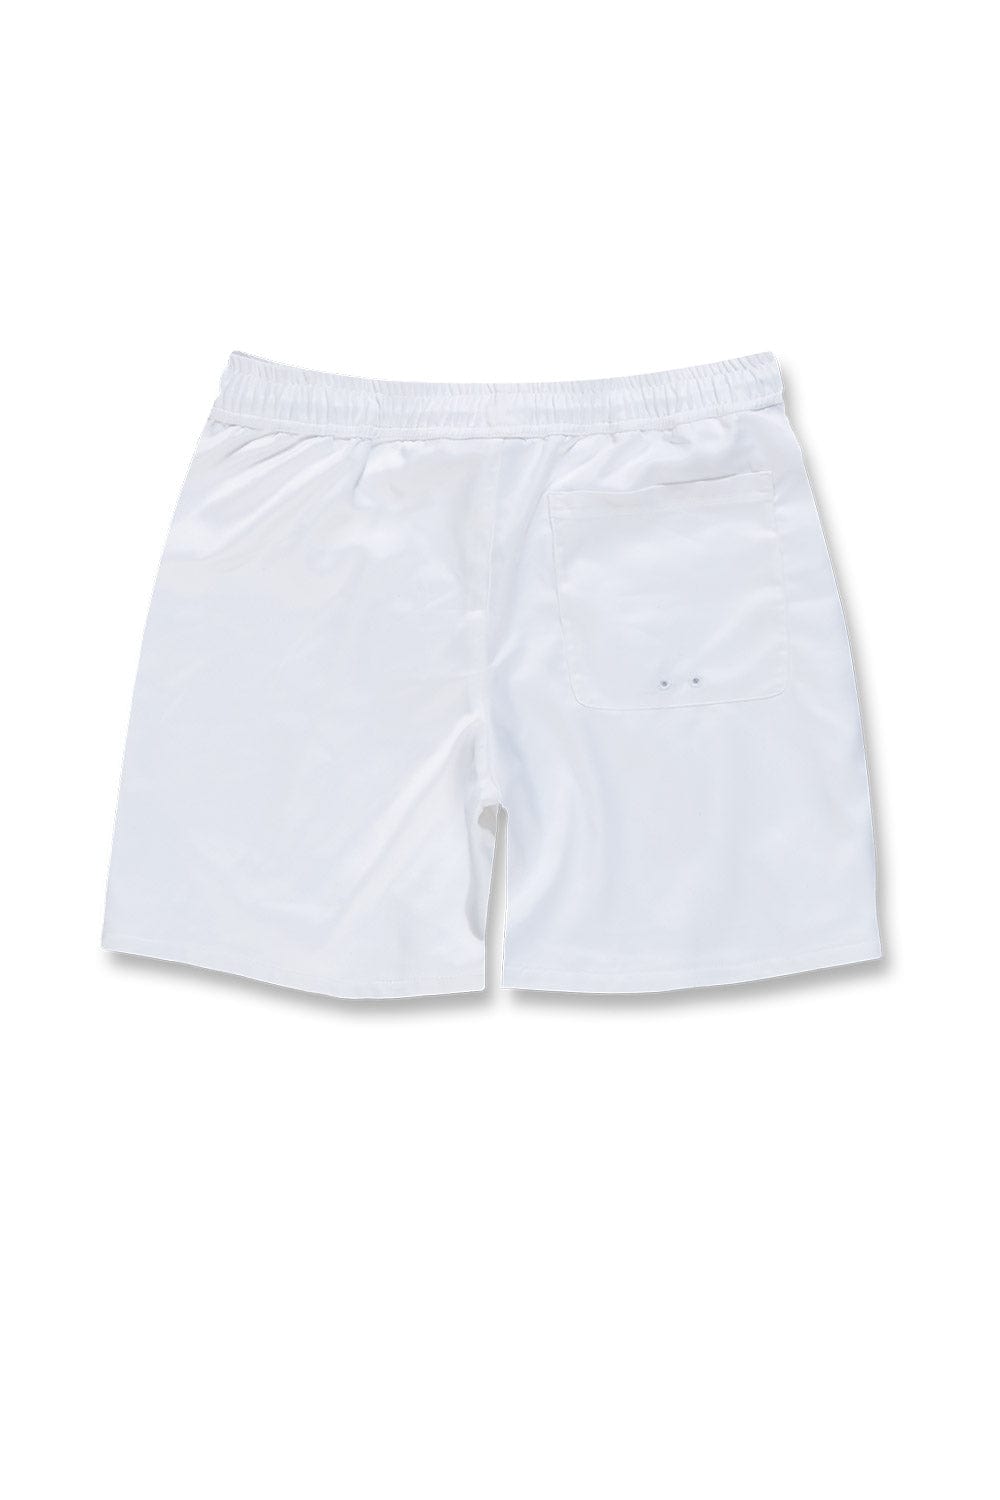 Jordan Craig Athletic - Lux Shorts